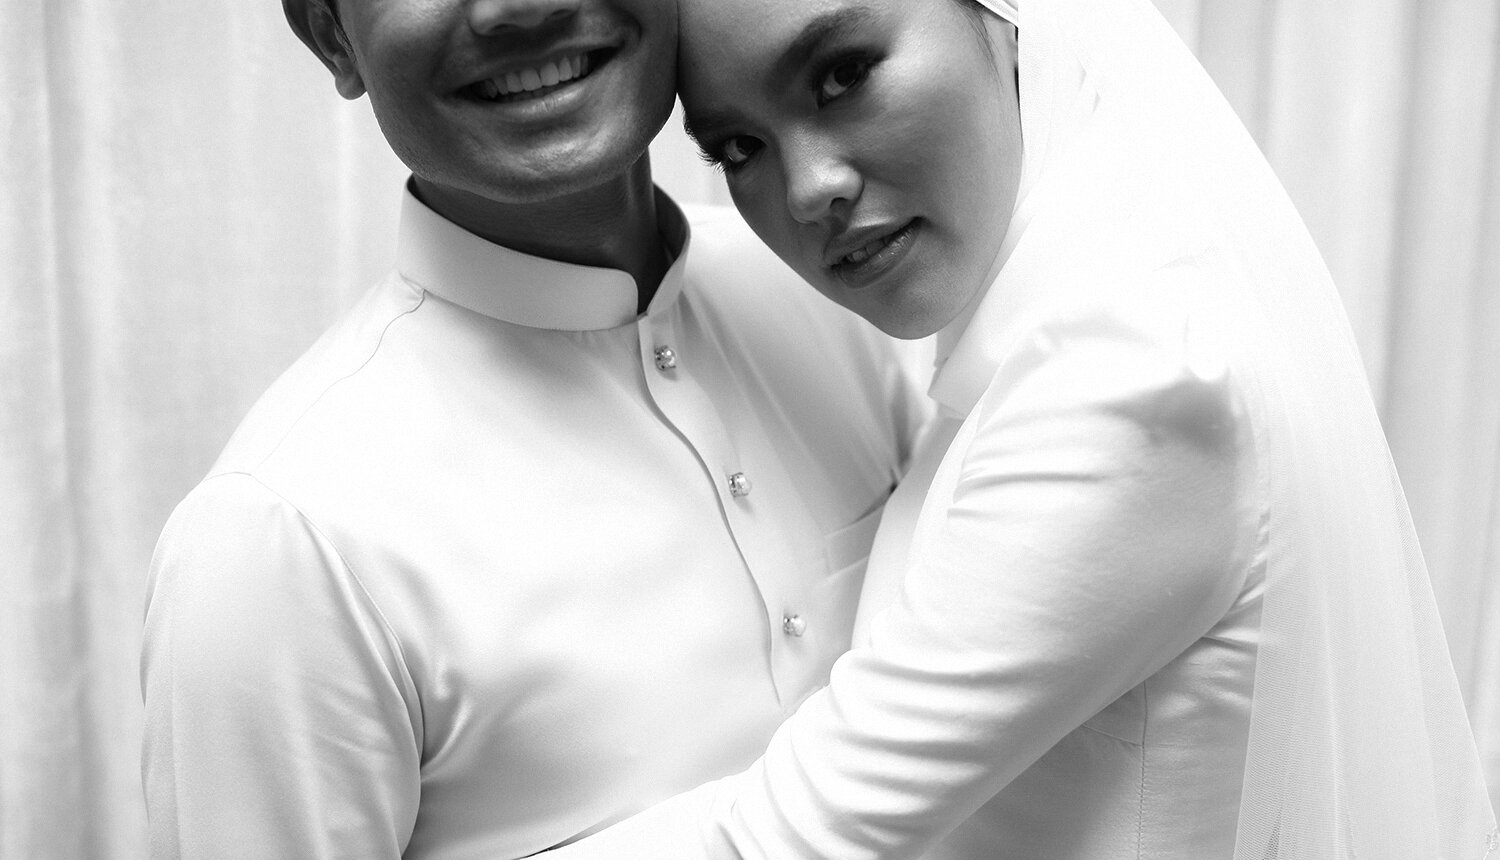 singapore malaysia top wedding photographer kurtahs studio radstorytellers rangefinder magazine photobug community for brides and groom baihaqkira big day akad nikah . 0124.jpg